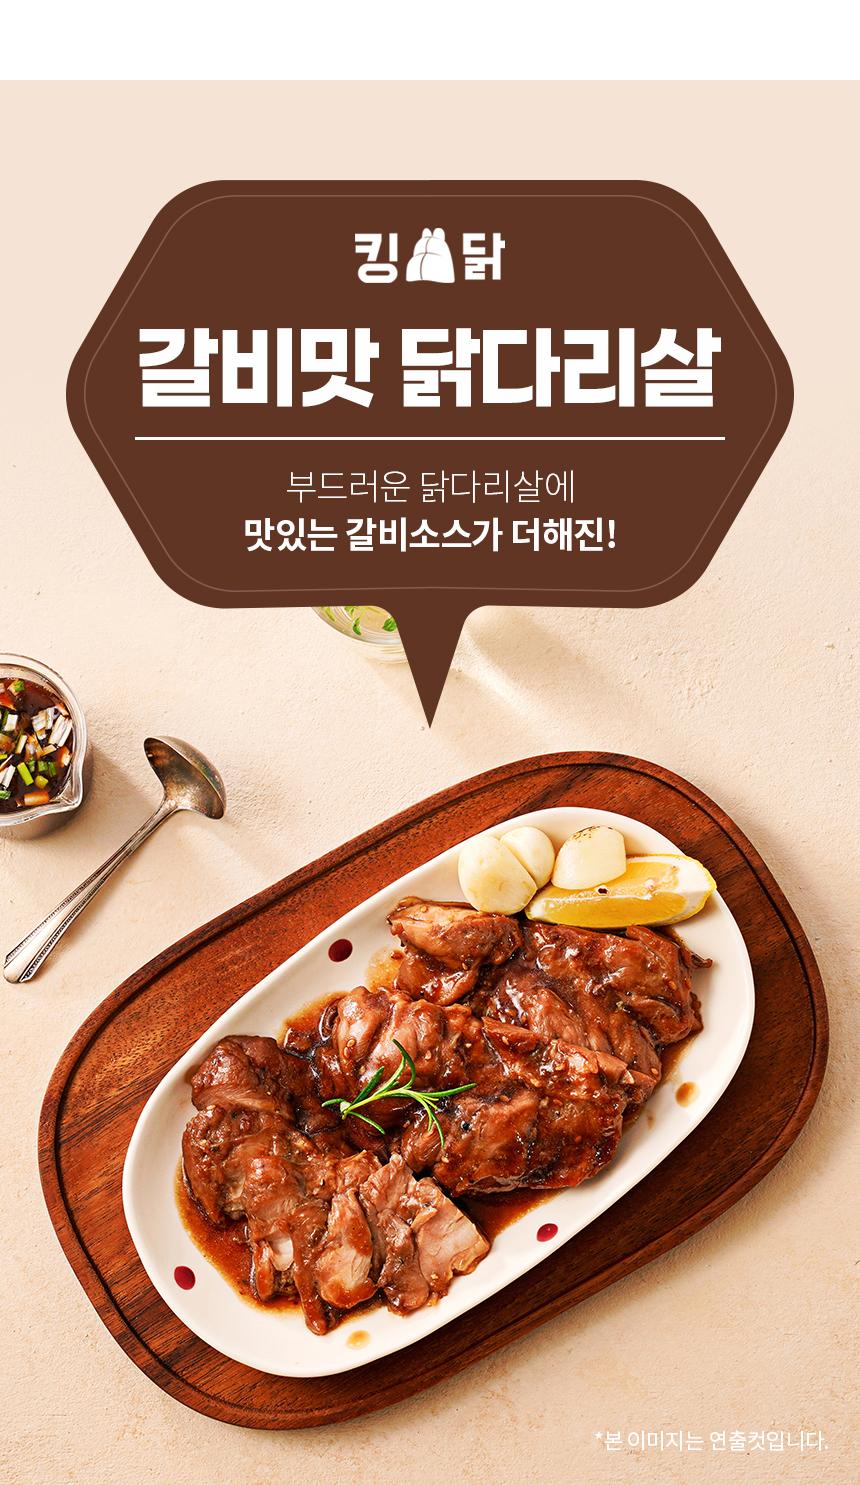 韓國食品-[Kingdak] Marinated Boneless Chicken Leg Meat (Kalbi) 100g